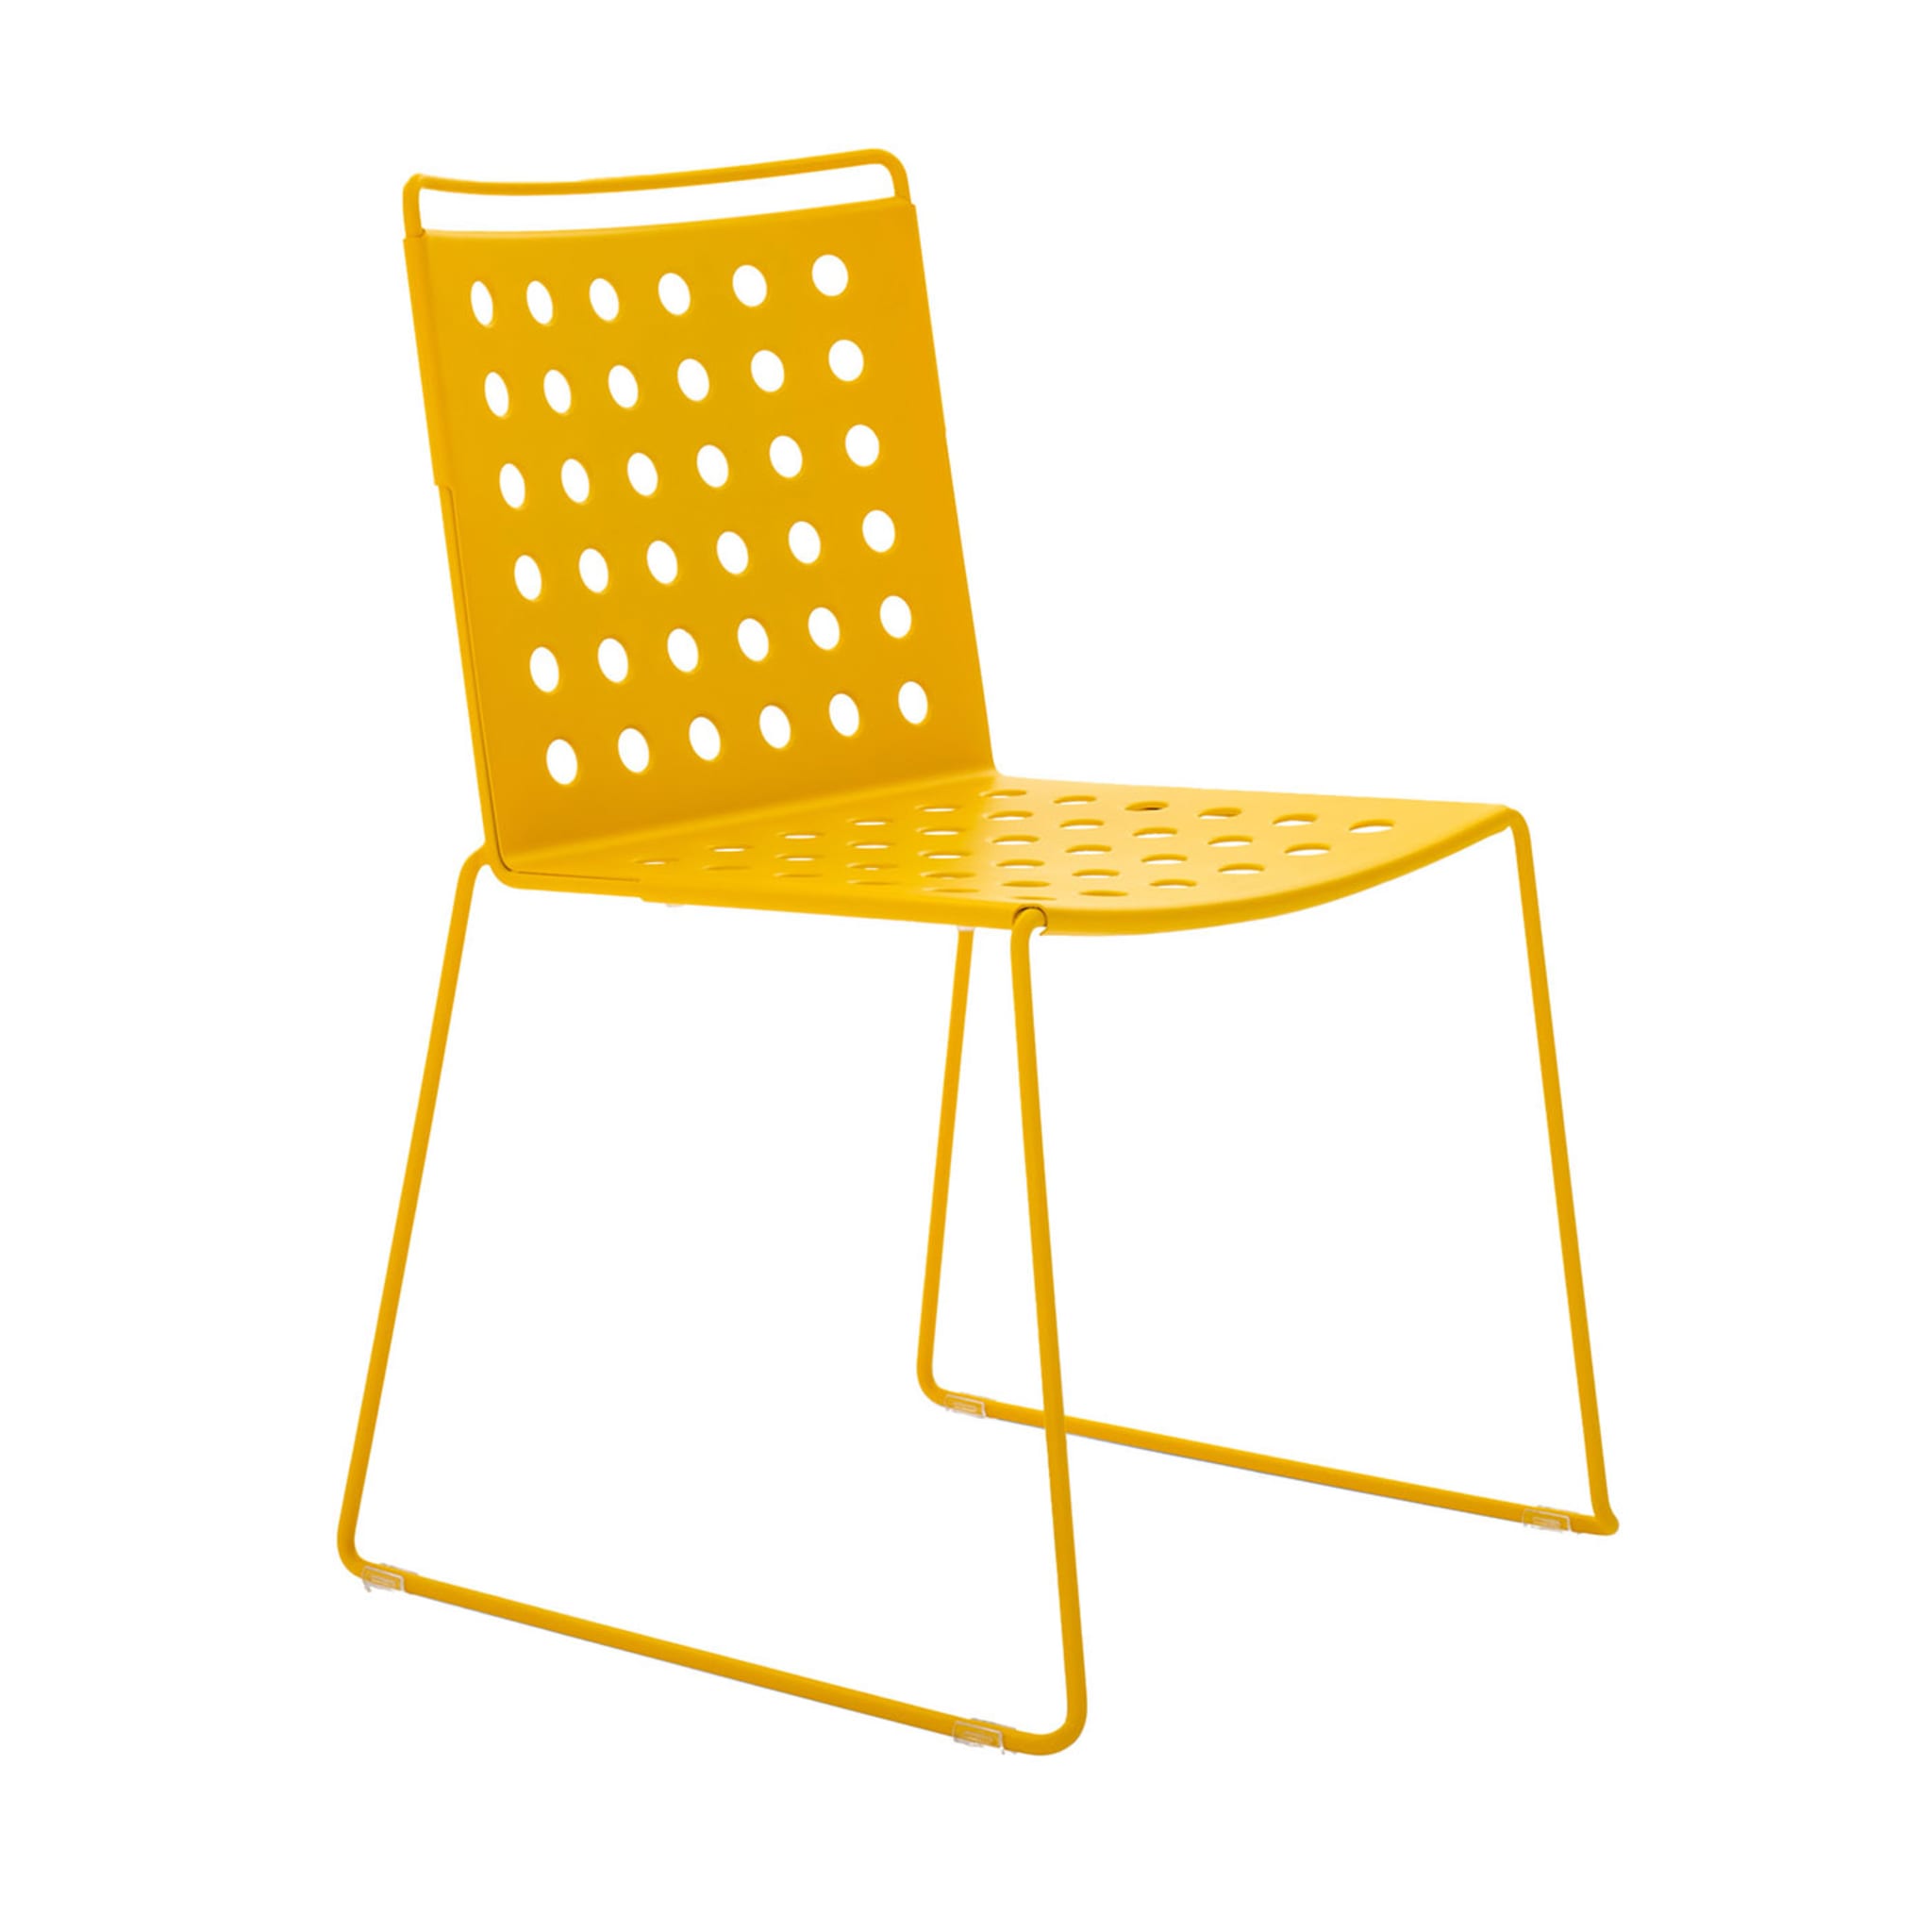 Chaise jaune occupée - Vue principale